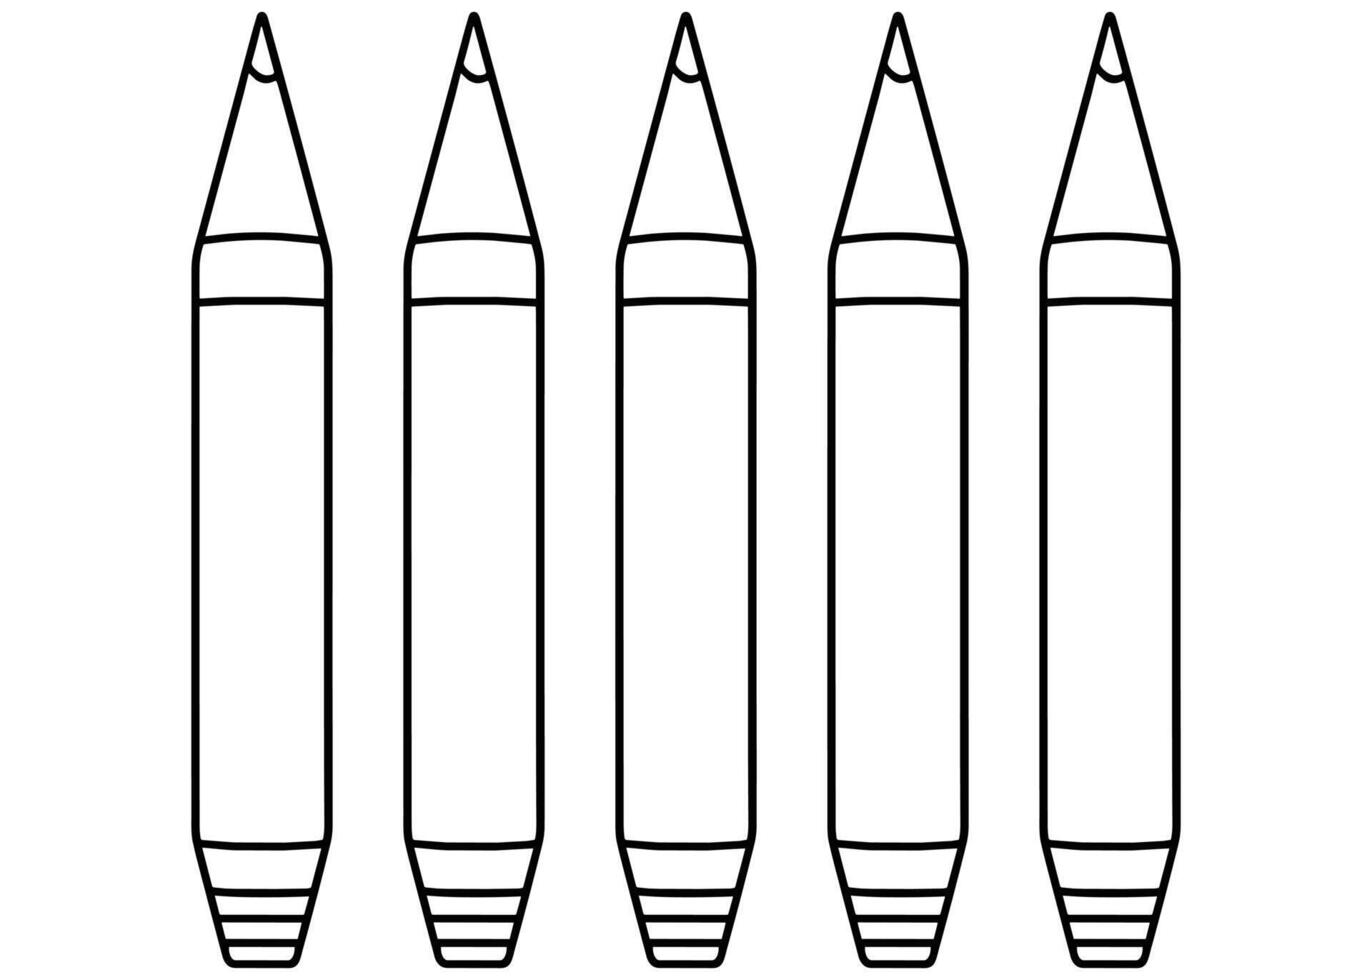 Crayons coloring page. vector